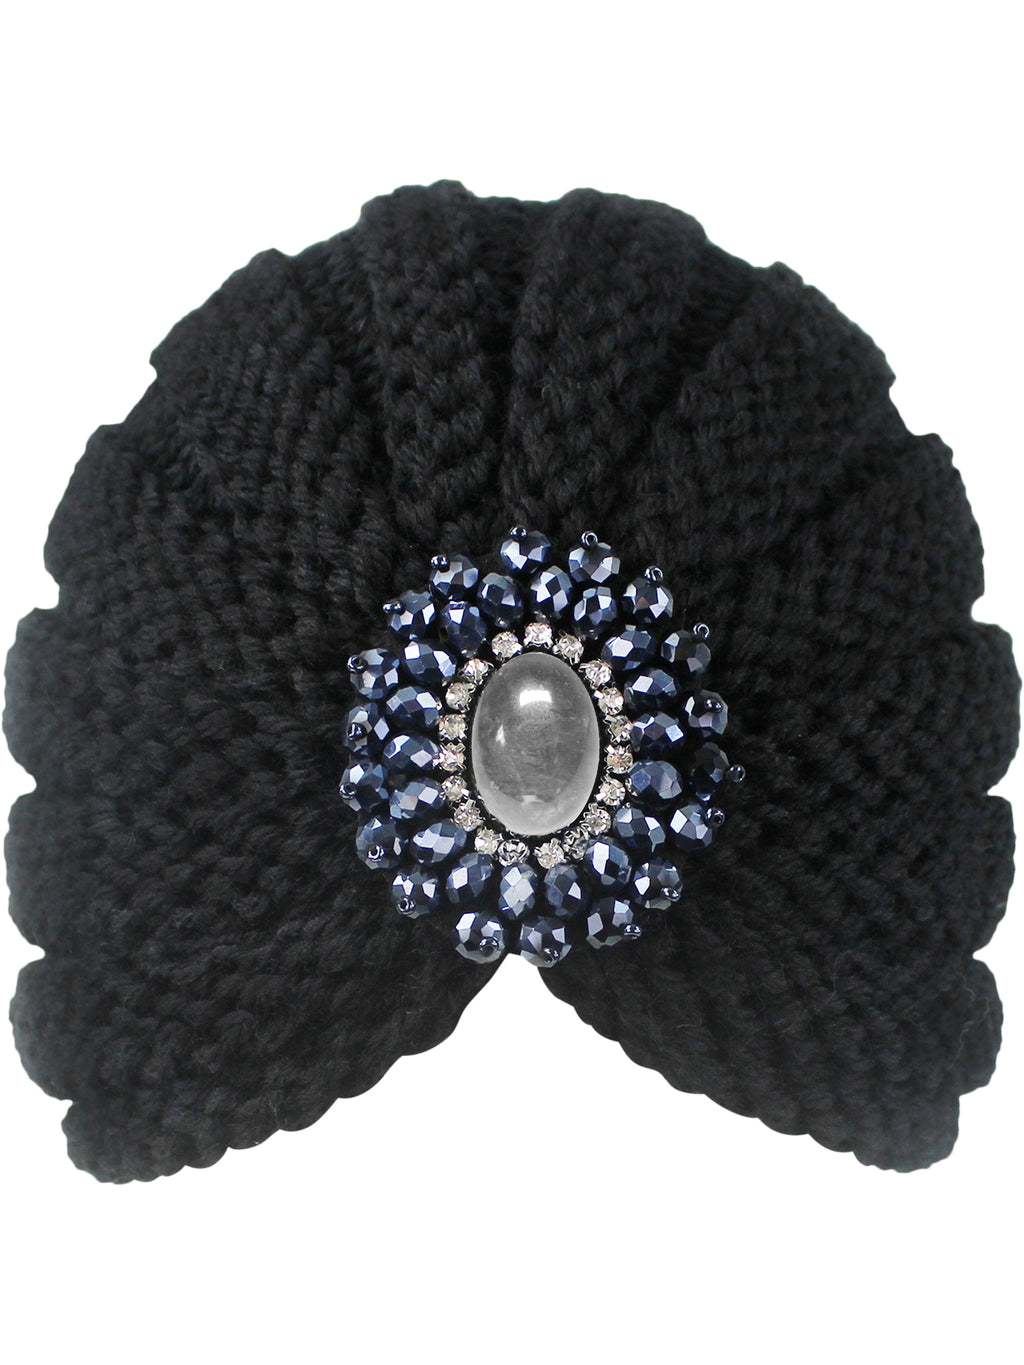 Black Knit Medallion Turban Head Wrap